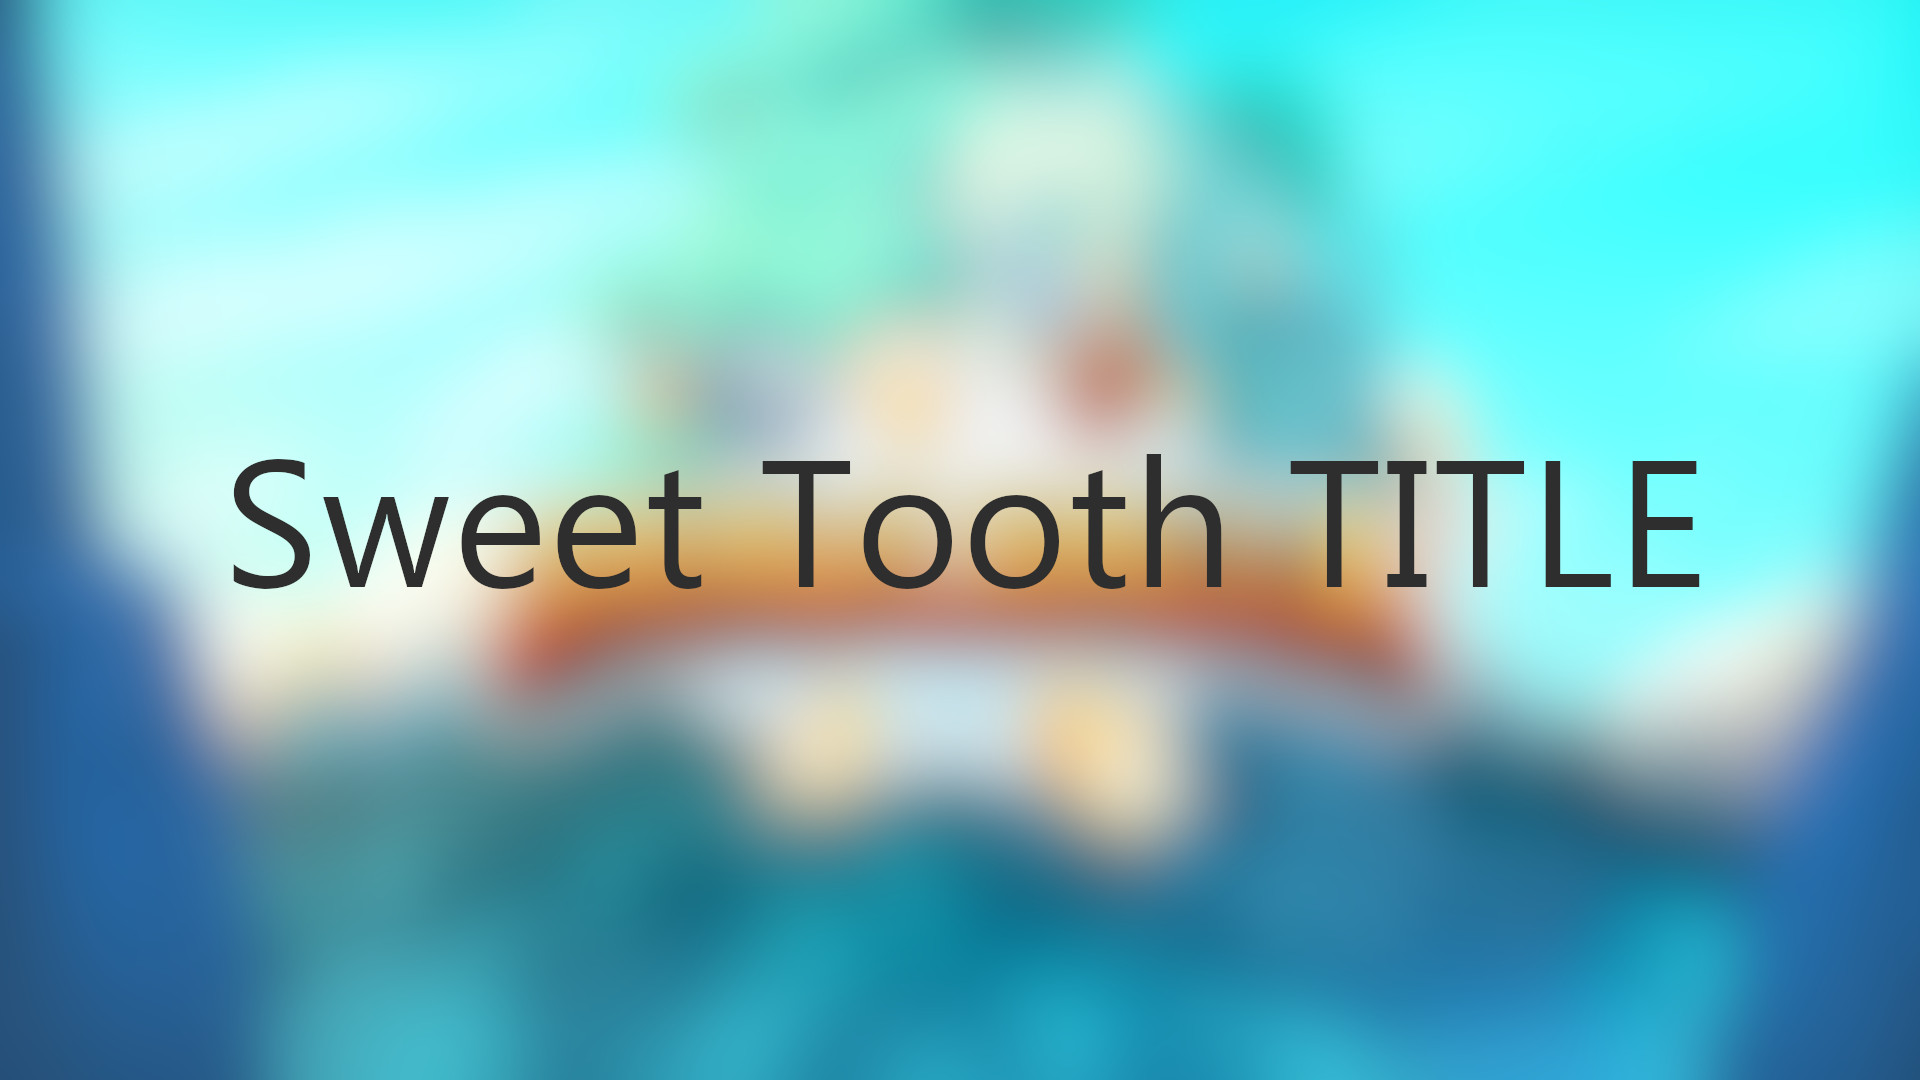 Brawlhalla - Sweet Tooth Title DLC CD Key